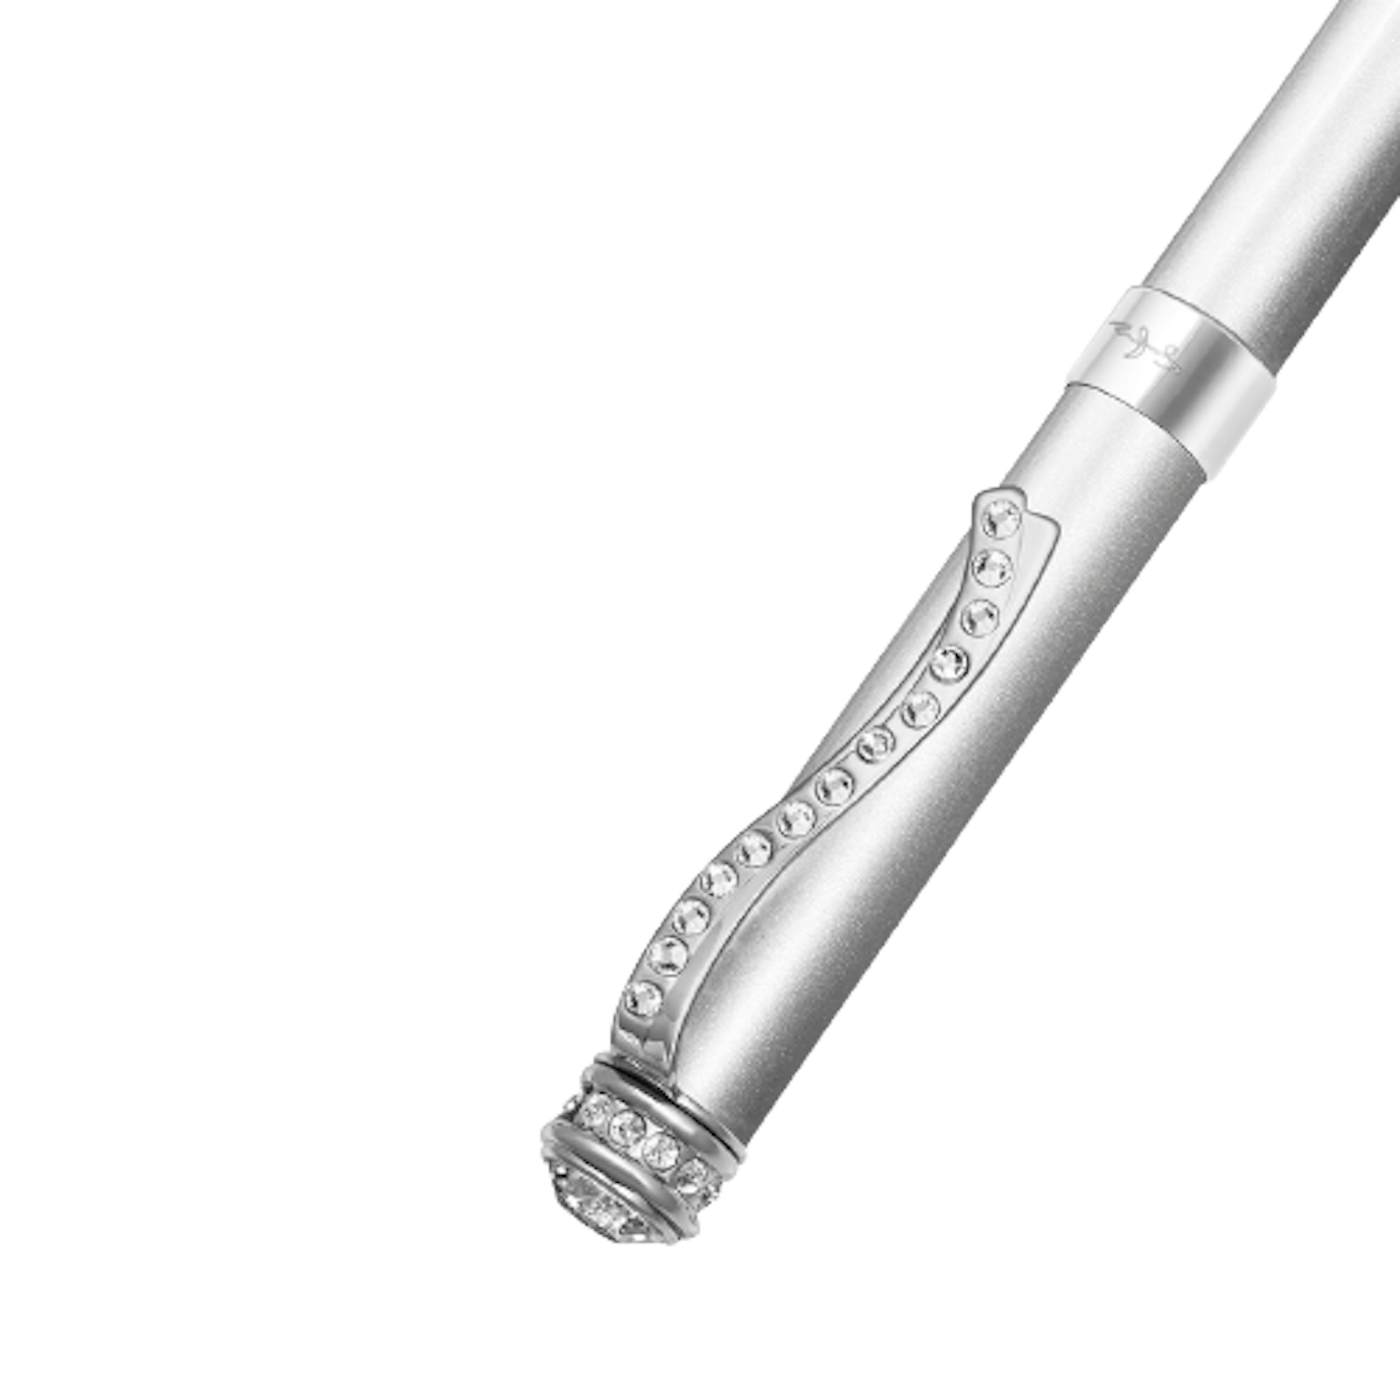 Sarah Brightman Unisex Jewel Pen With Bend Clip - Silver